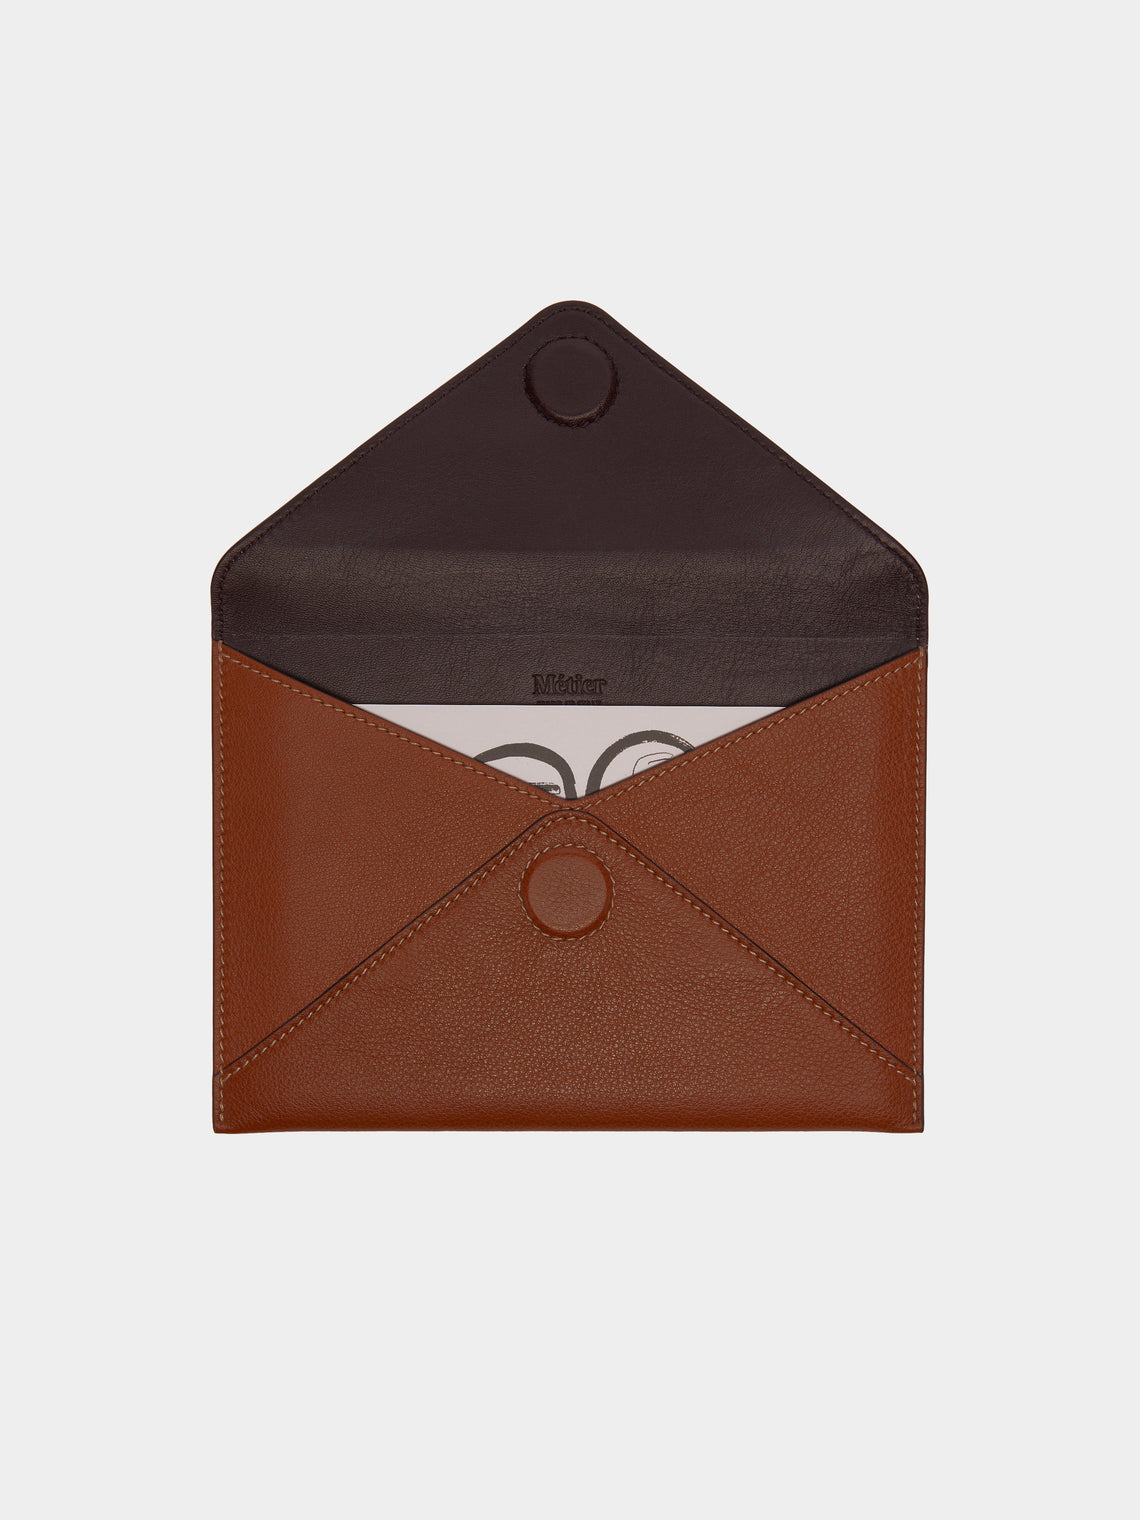 Métier - Leather Envelope - Brown - ABASK